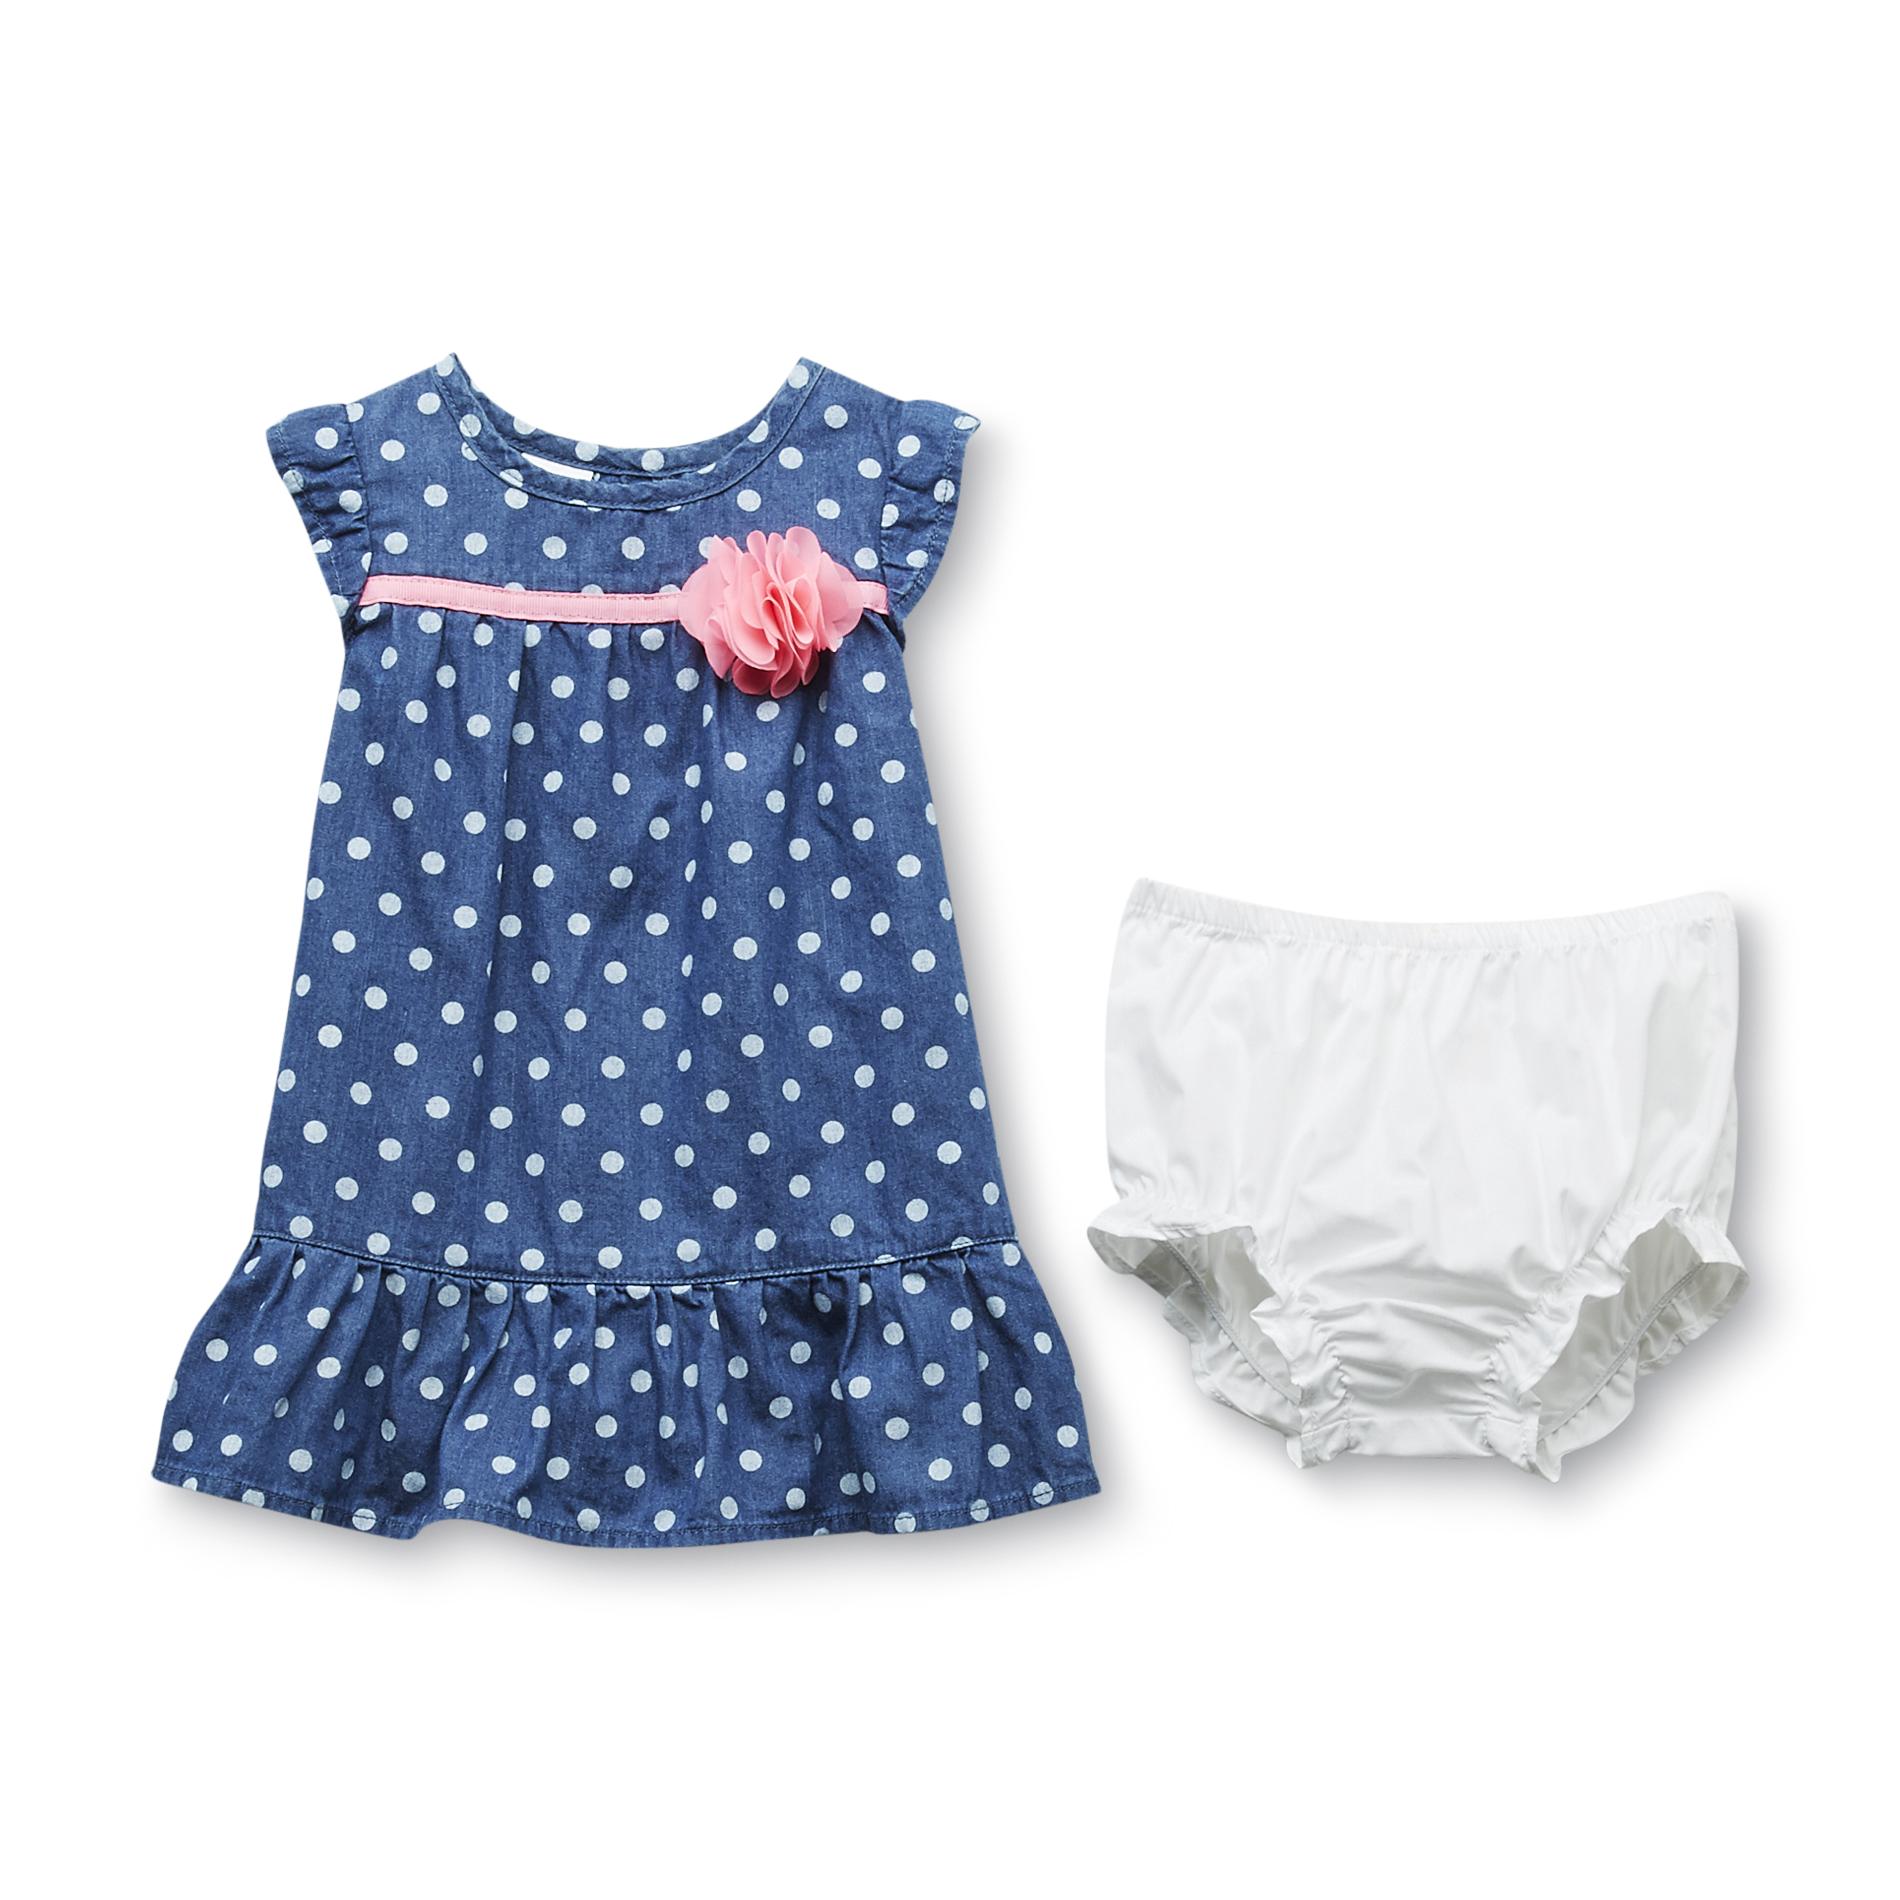 Small Wonders Newborn Girl's Ruffle Dress & Diaper Cover - Polka Dots